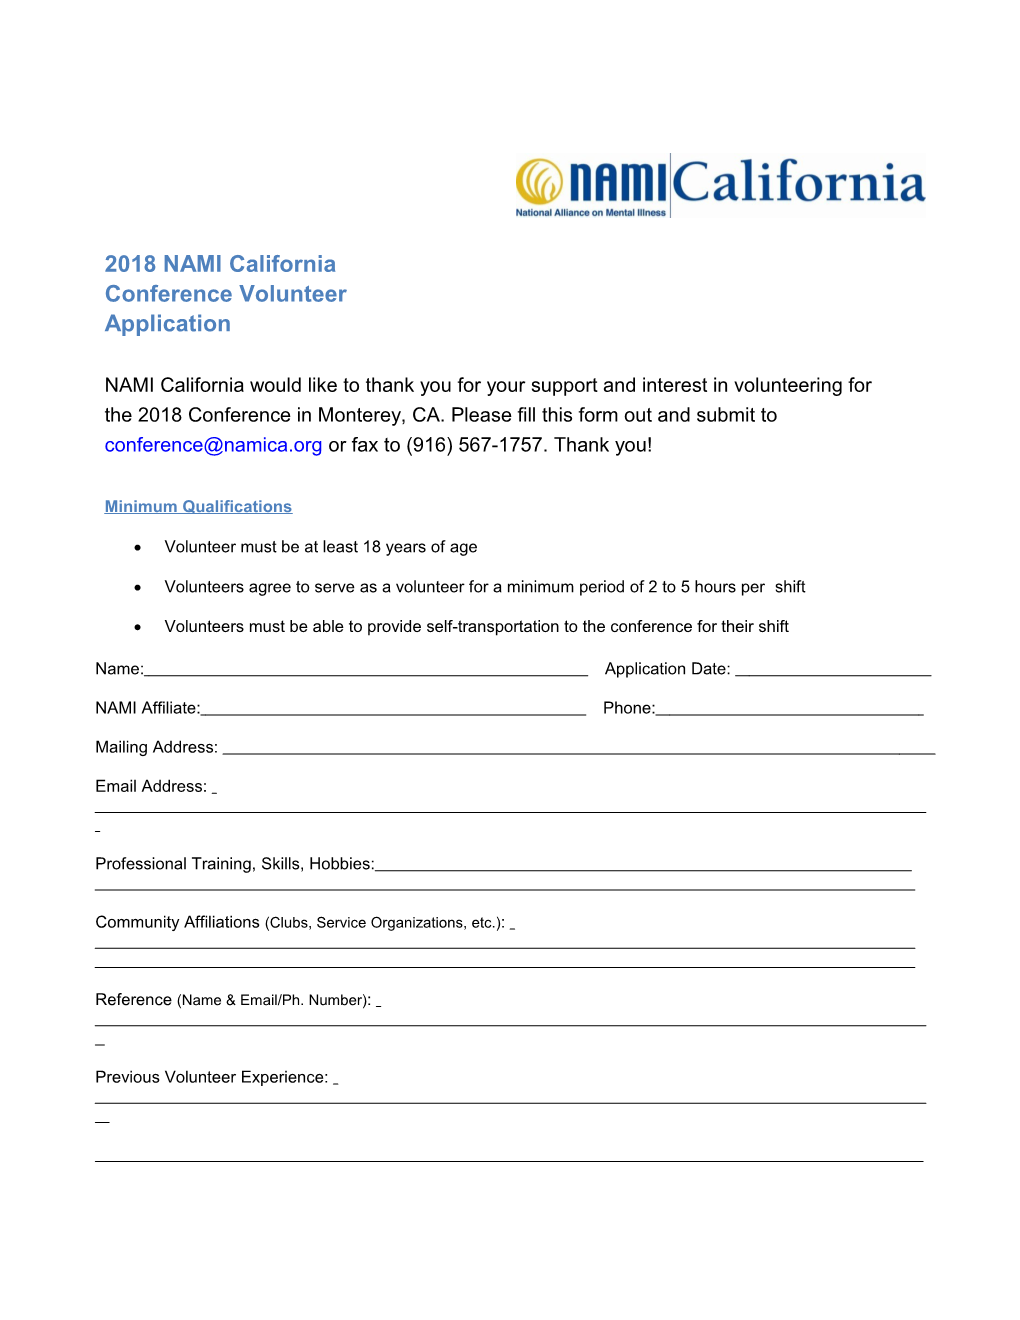 2018 NAMI California Conference Volunteer Application